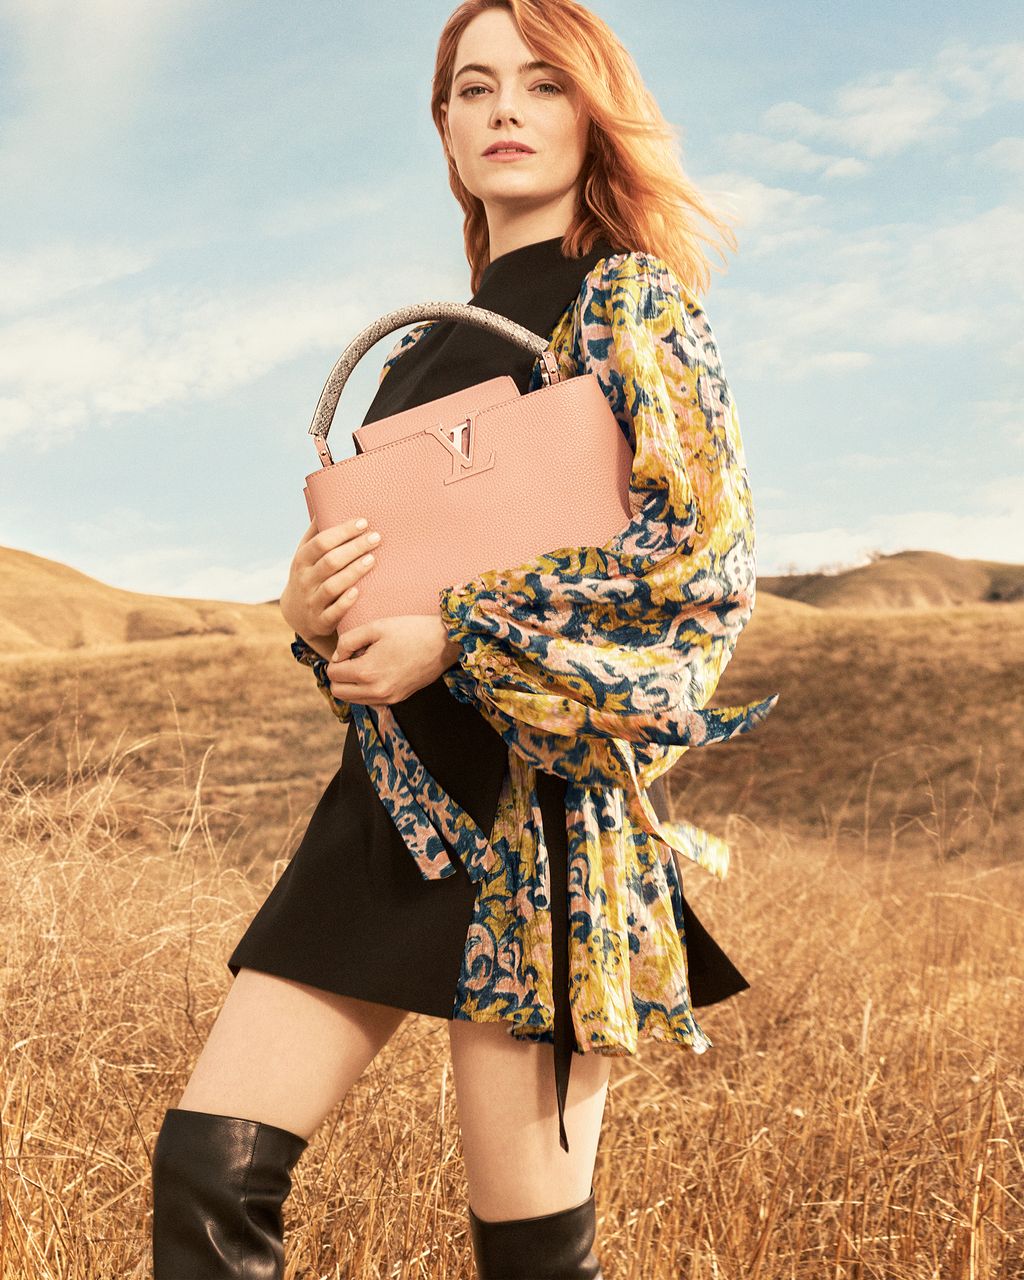 Louis Vuitton New Classics Pre-Fall 2020 campaign starring Emma